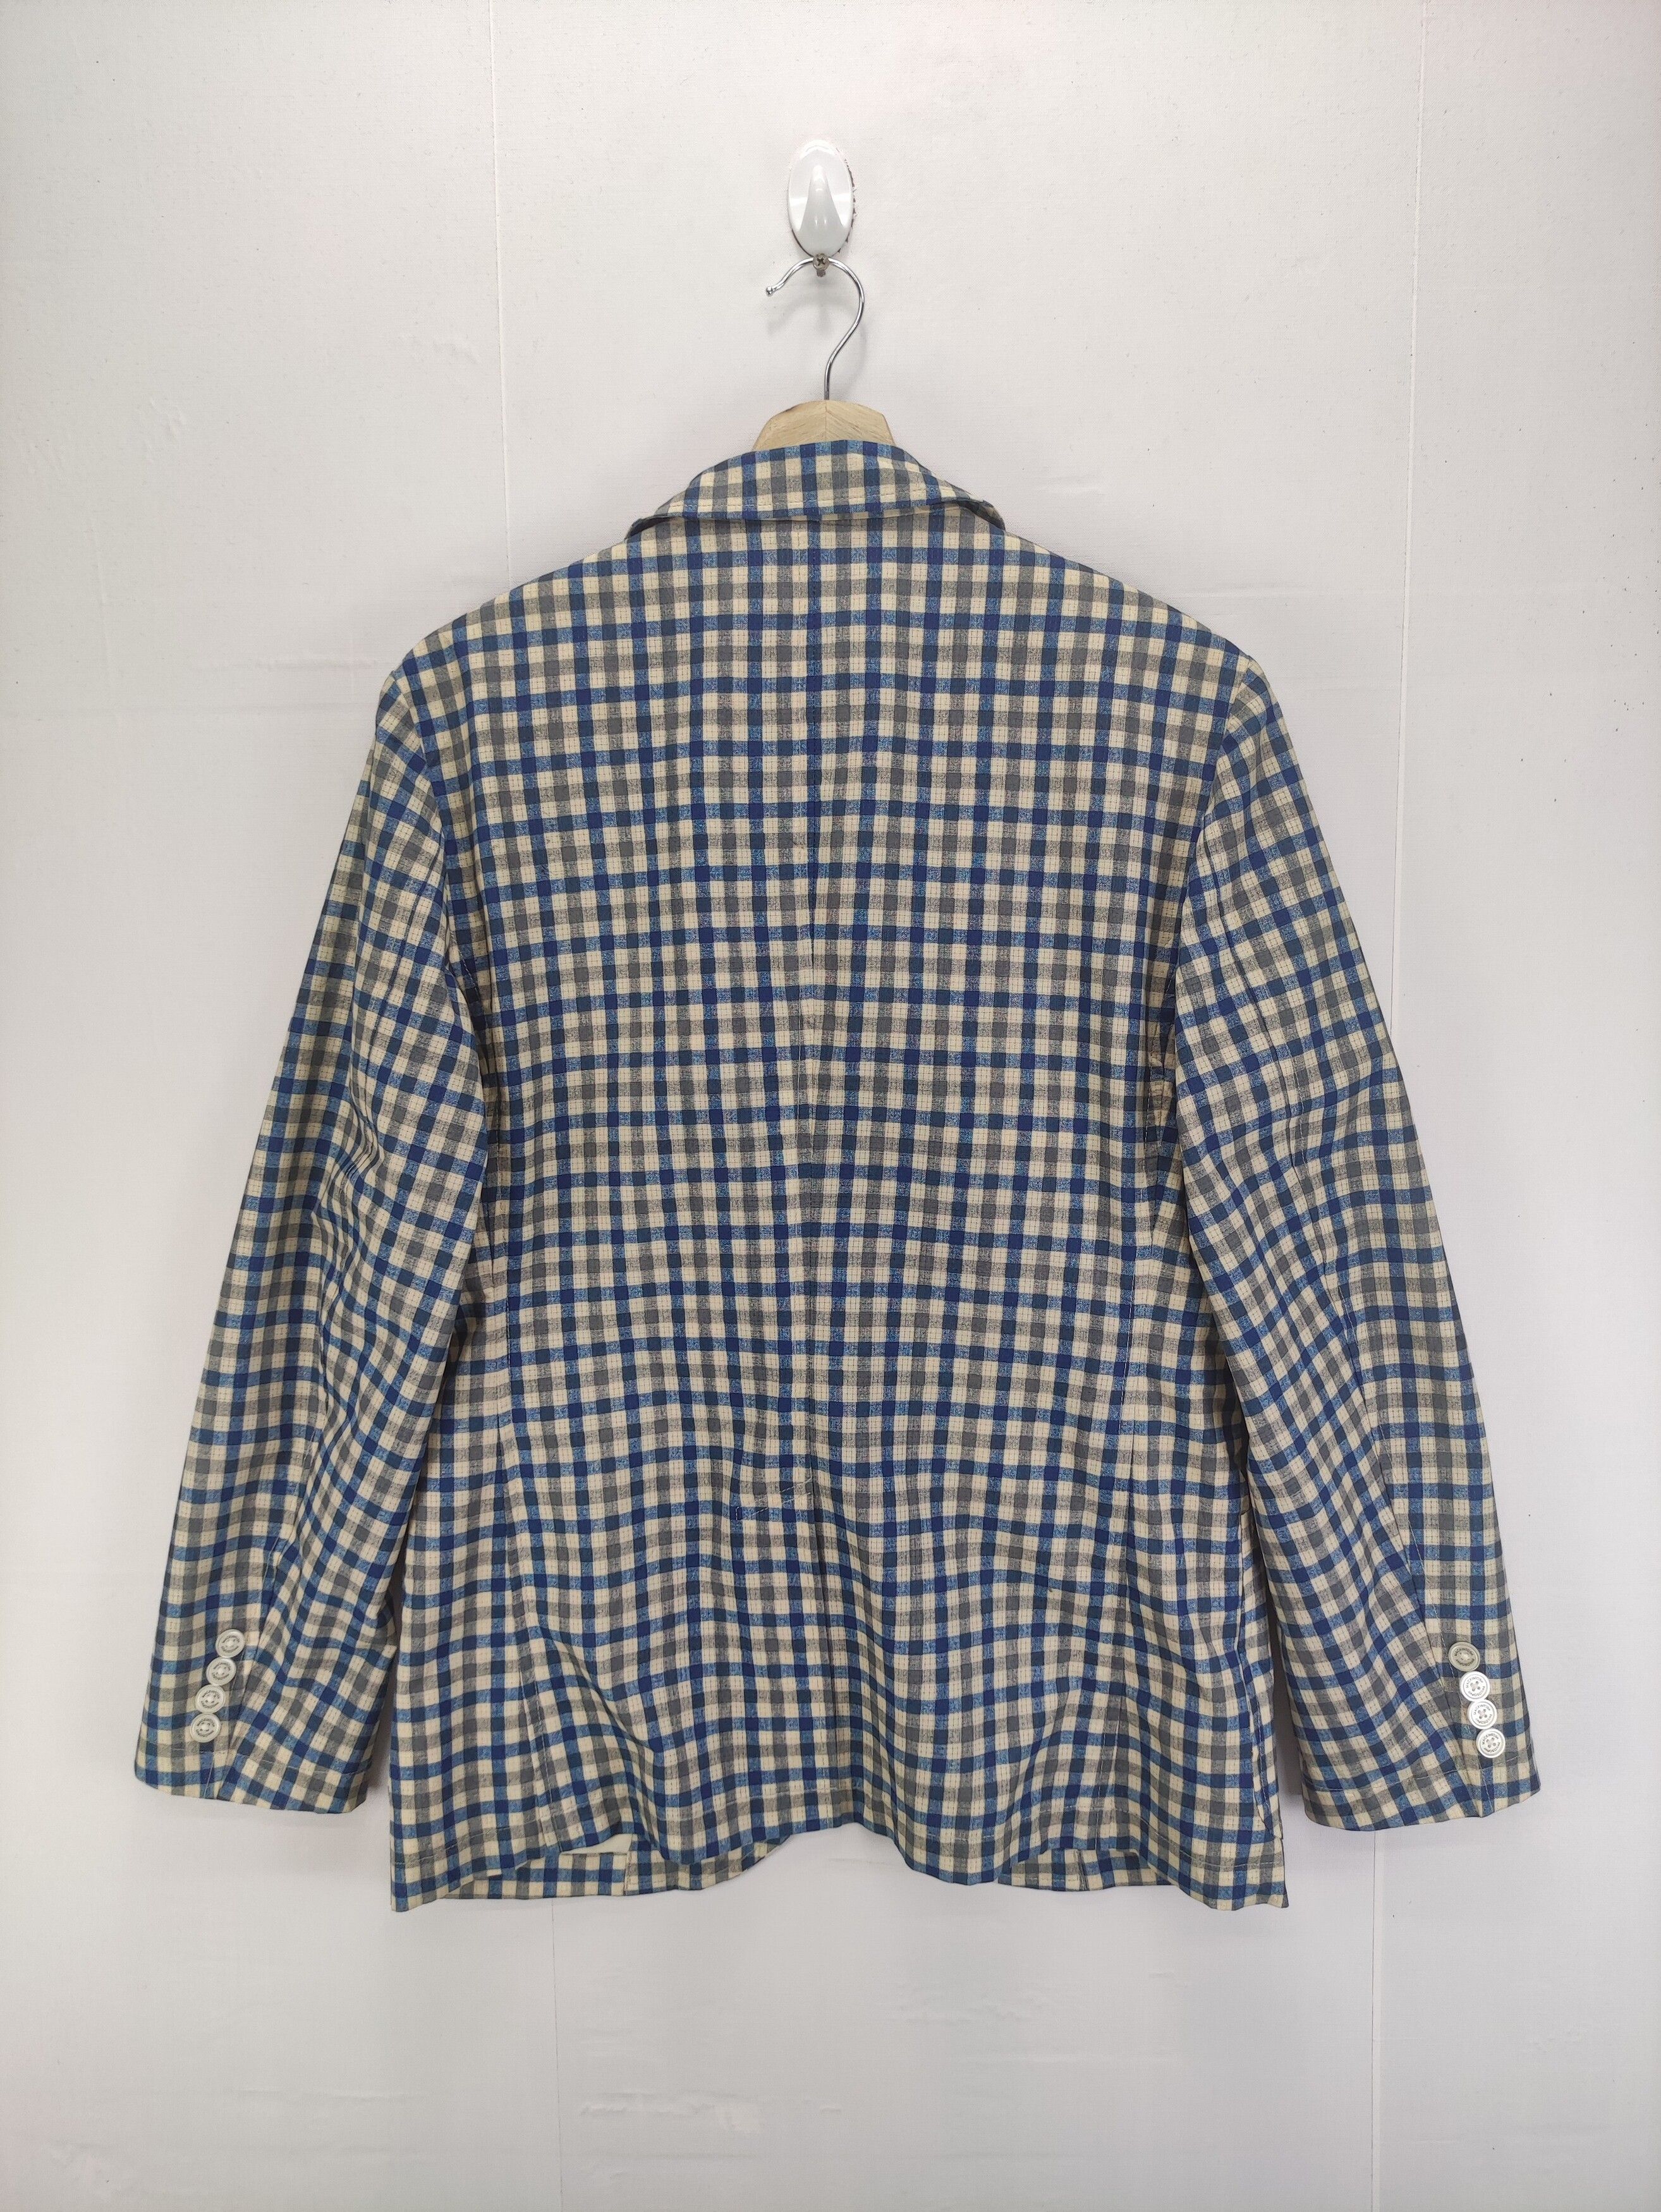 Mackintosh Vintage Mackintosh Philosophy Coat Jacket Checkered Size US S / EU 44-46 / 1 - 9 Preview